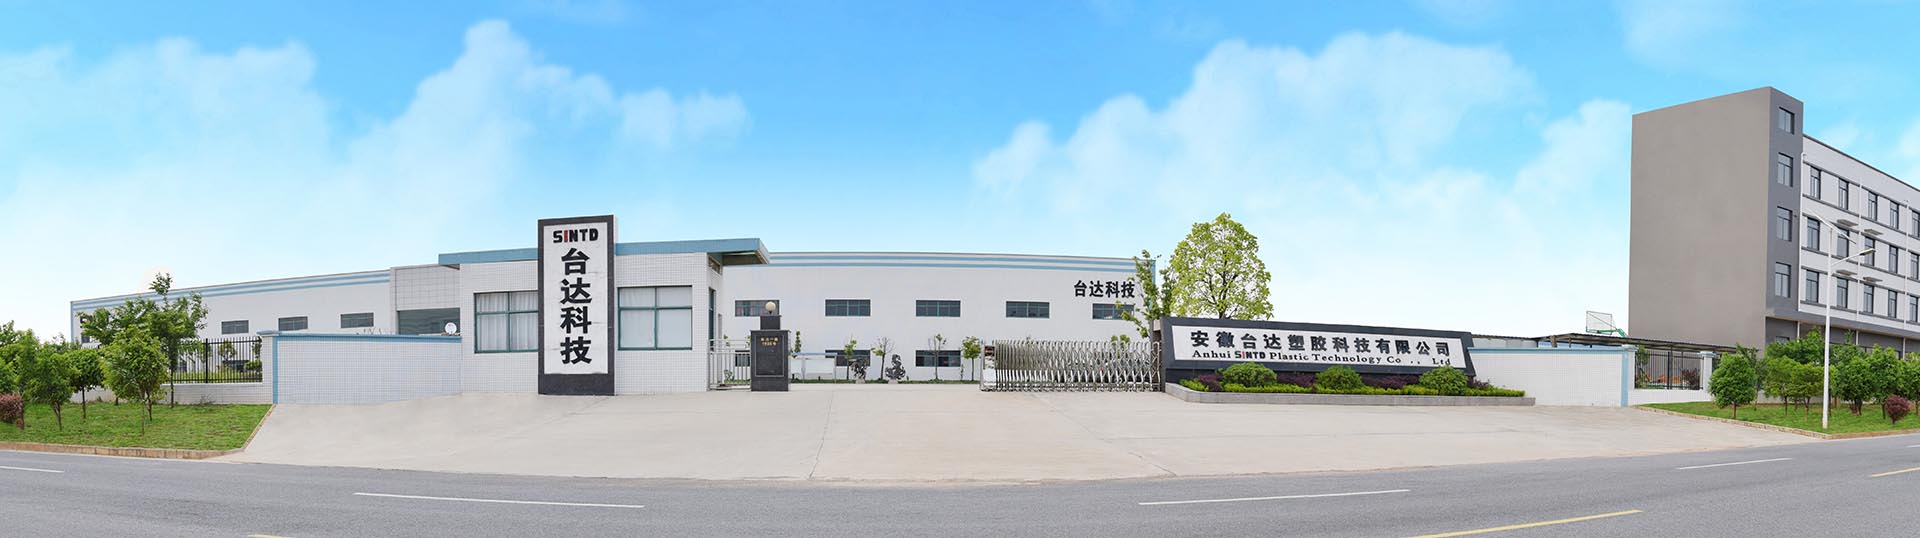 Baotou Liande Oil and Mechanical Co., Ltd